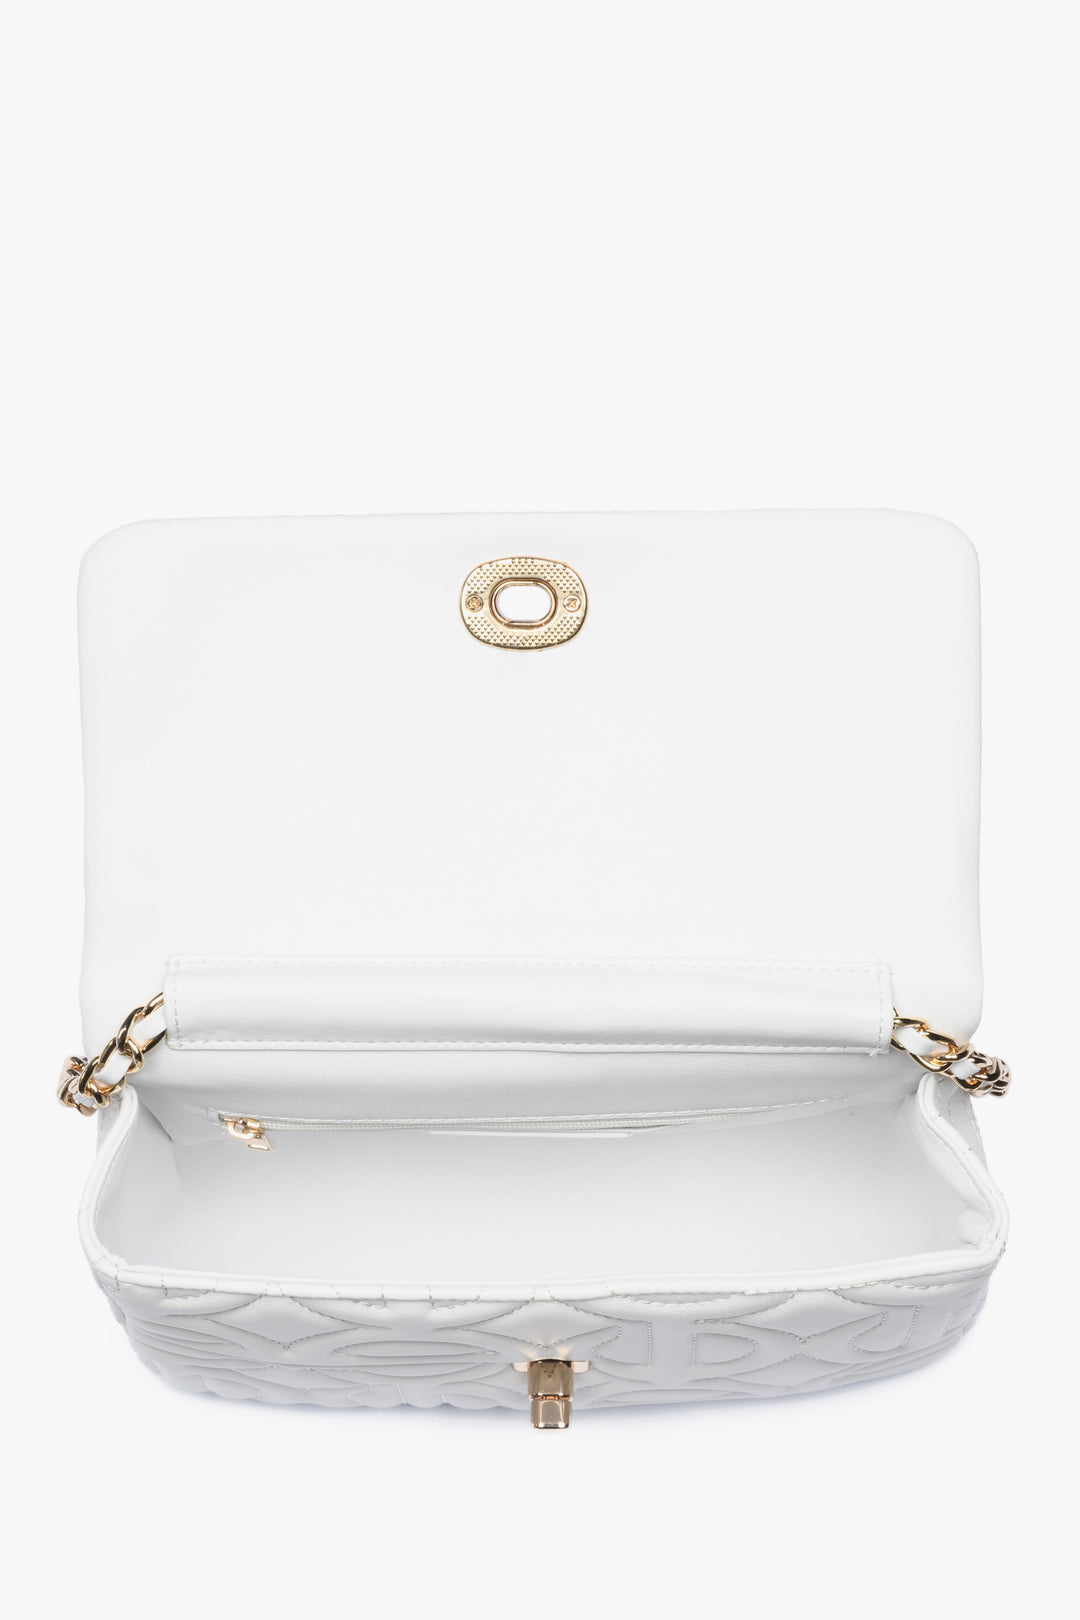 Stylish, women's white  handbag Estro made of genuine leather - close-up on details.